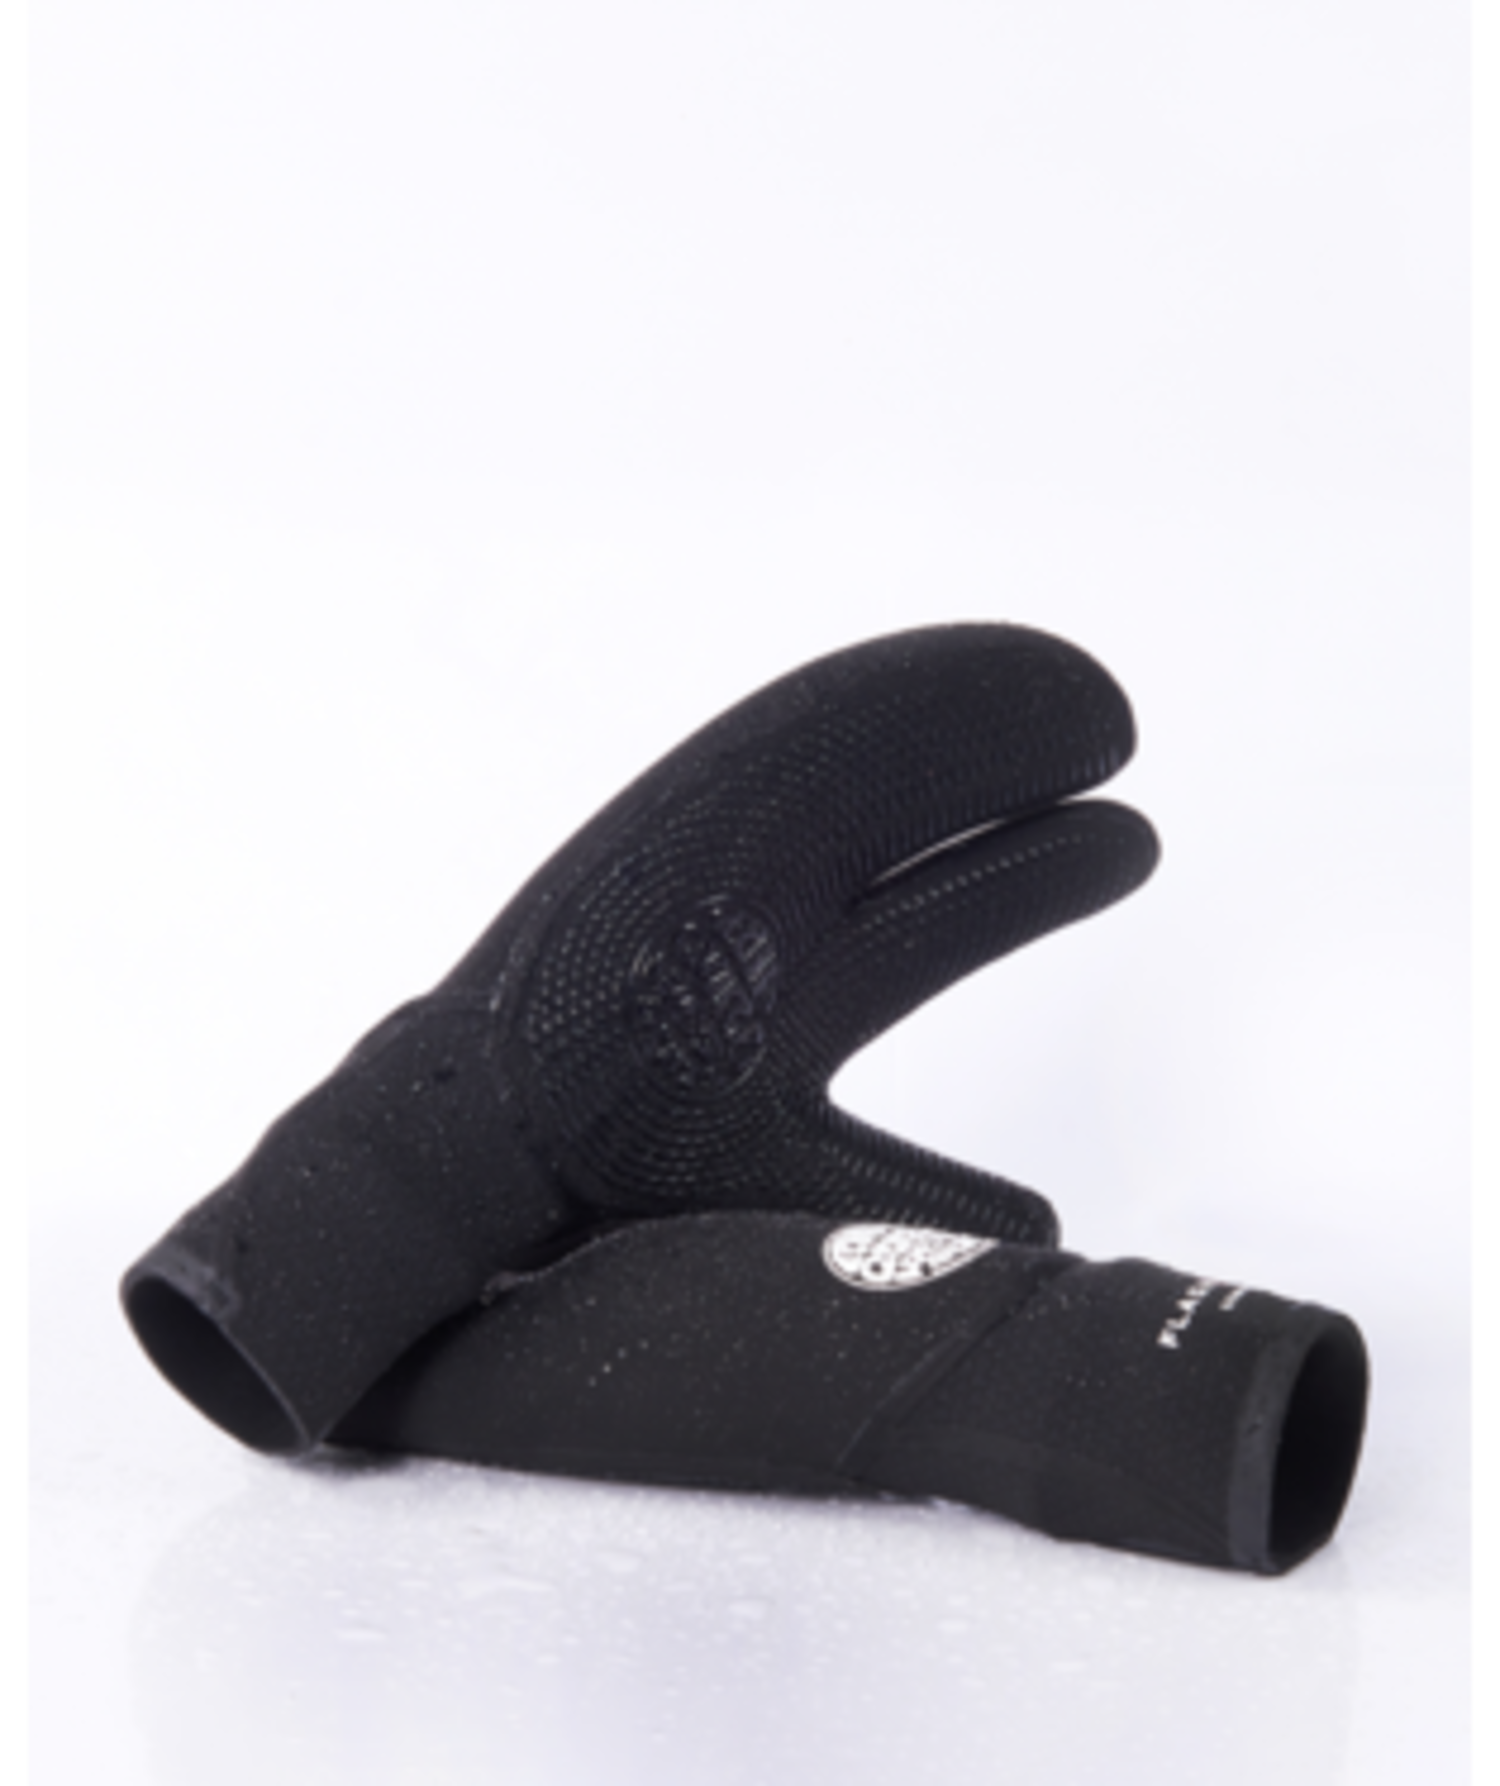 https://cdn.shoplightspeed.com/shops/629247/files/45581272/1500x4000x3/rip-curl-rip-curl-flashbomb-5-3mm-3-finger-glove.jpg